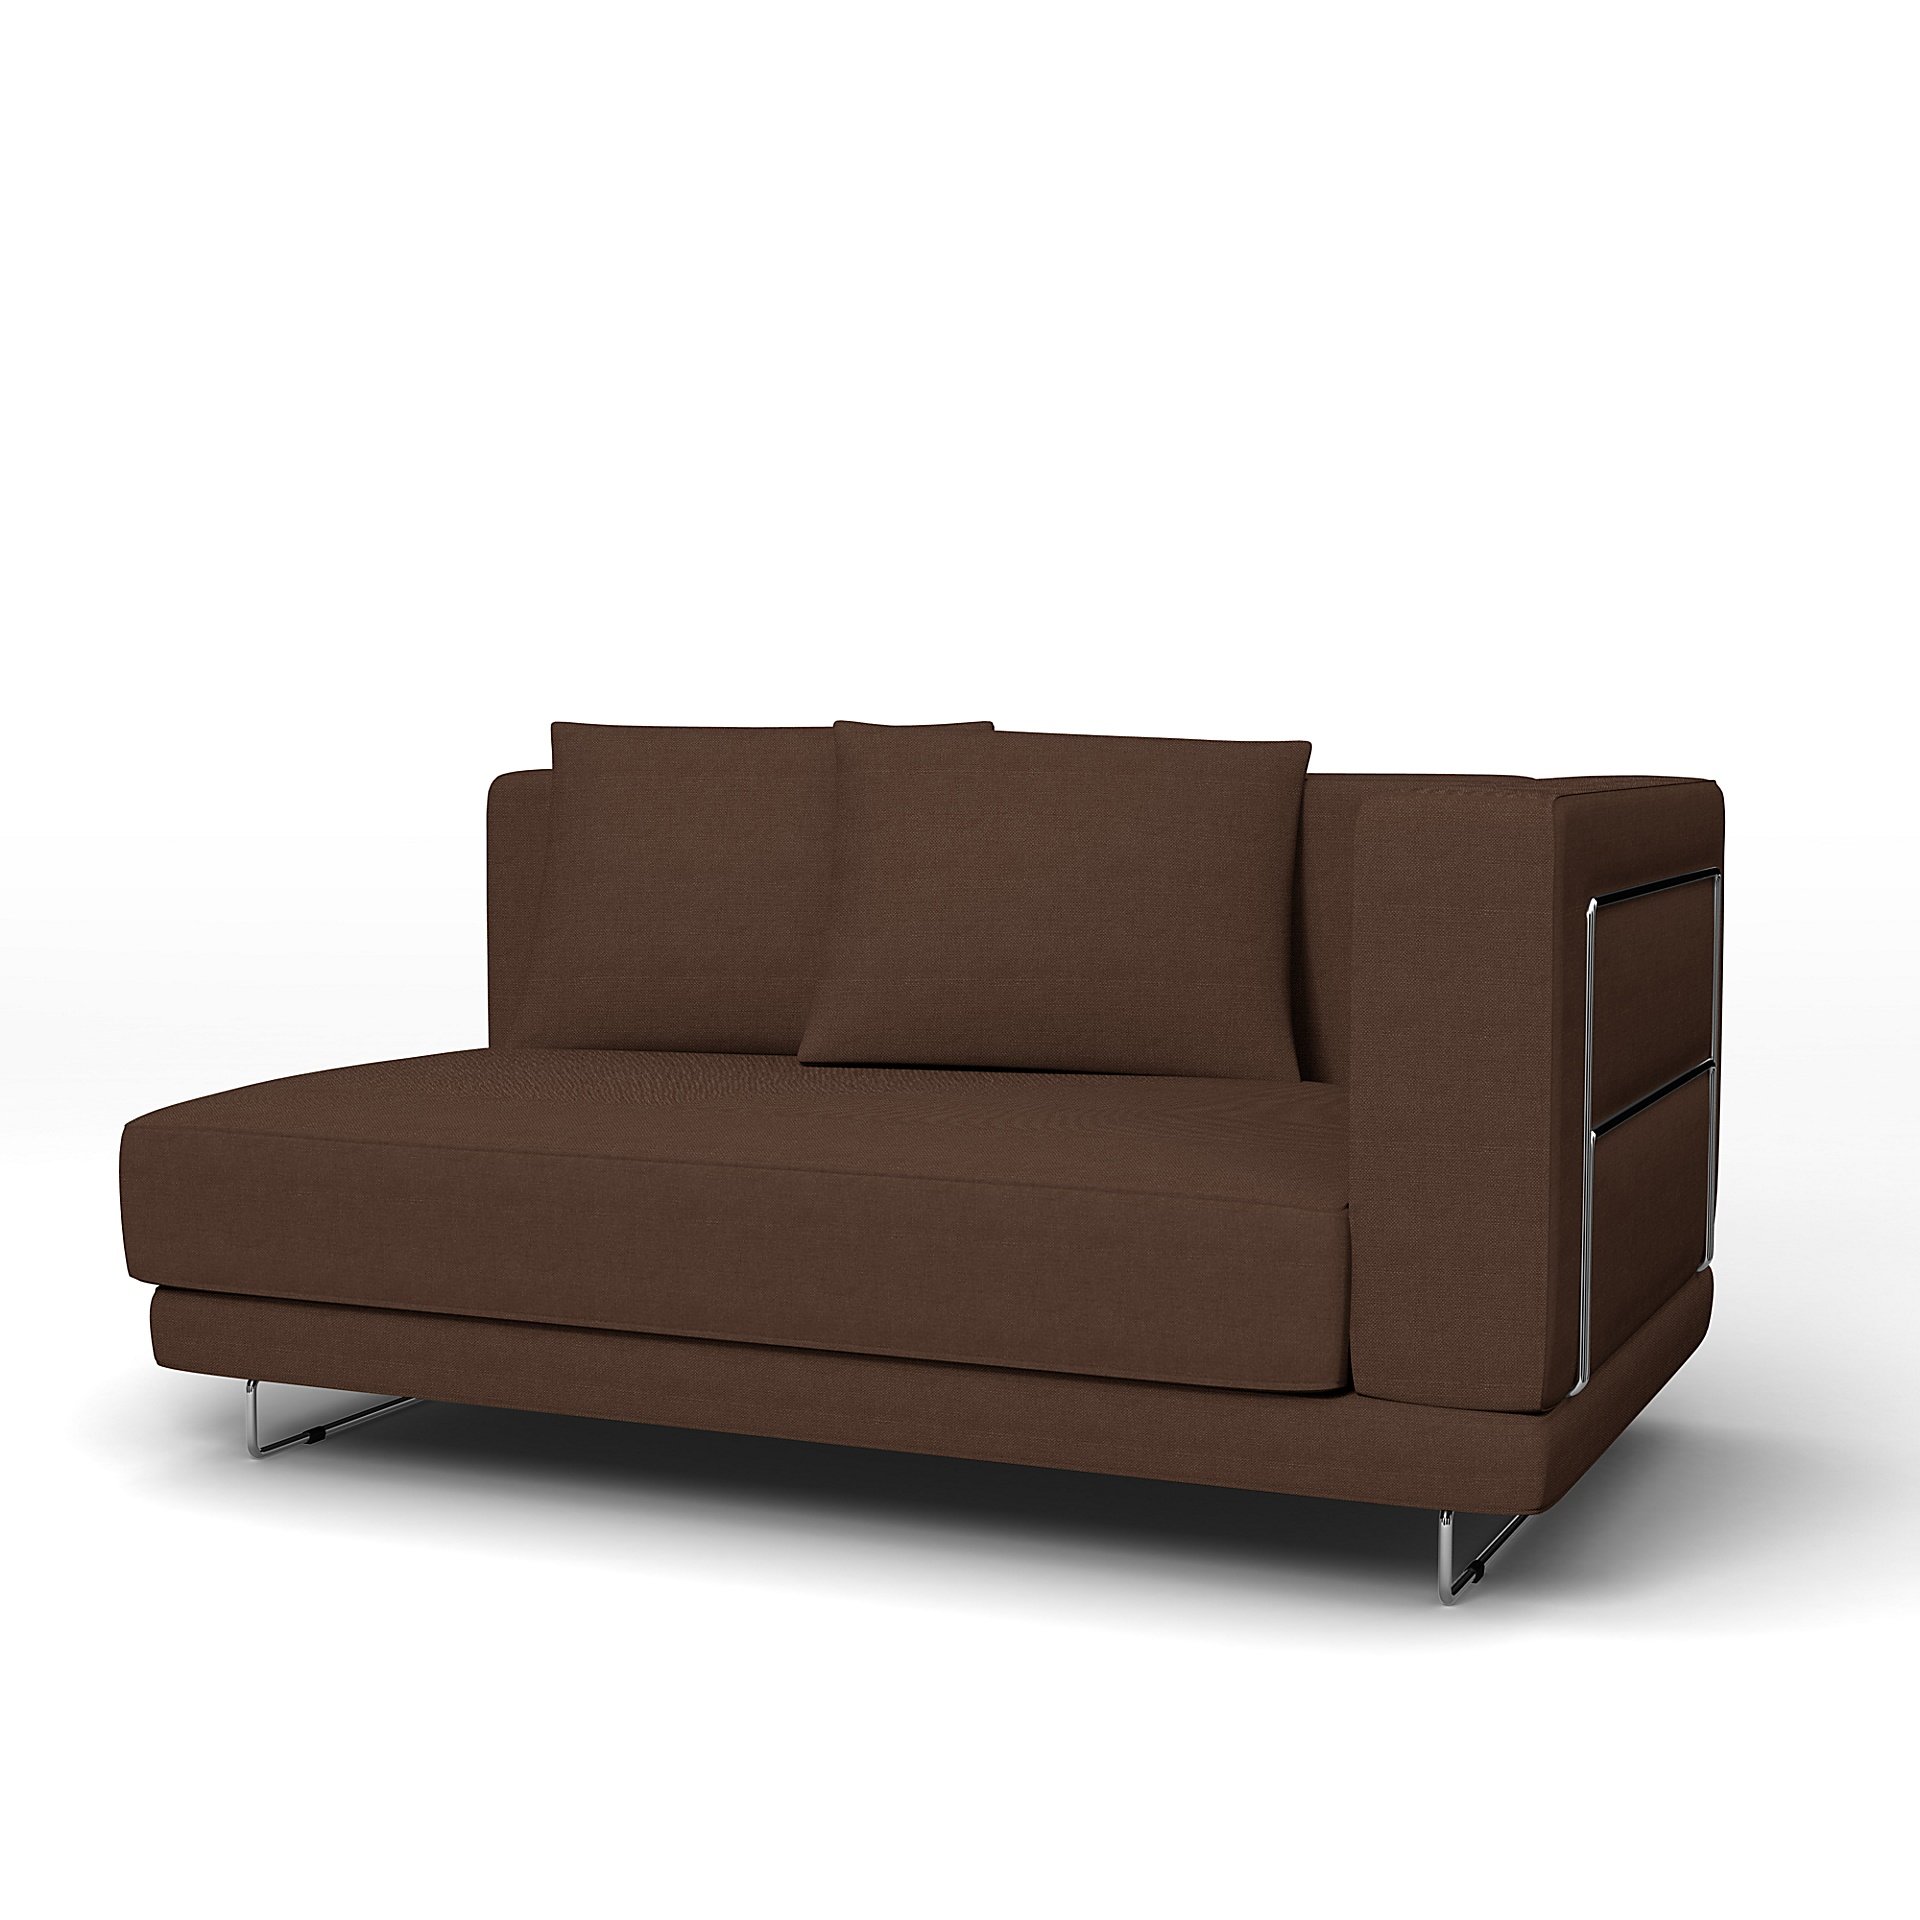 IKEA - Tylosand Sofa with Armrest Cover, Chocolate, Linen - Bemz